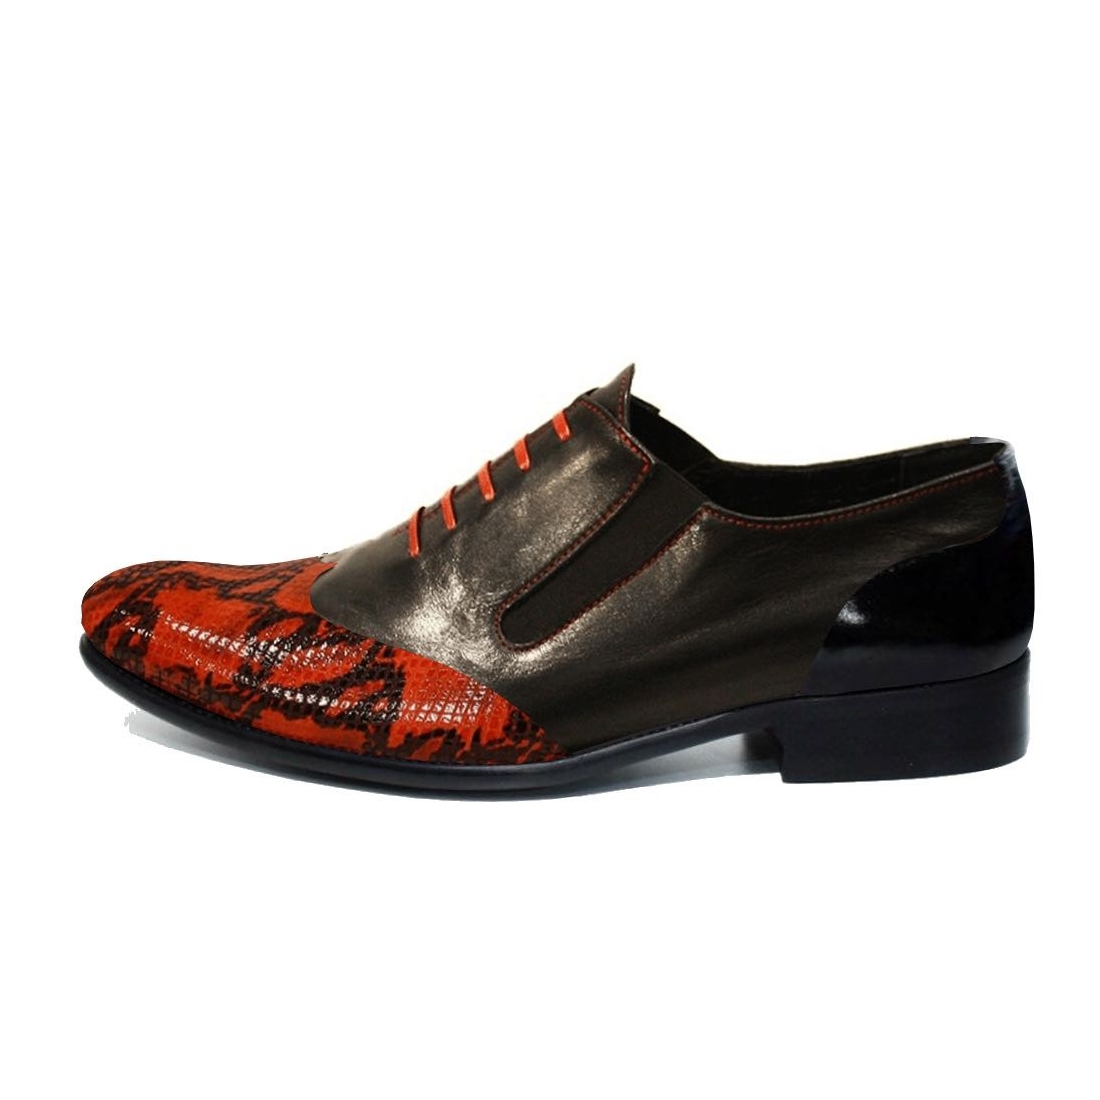 Modello Leterro - Slipper - Handmade Colorful Italian Leather Shoes